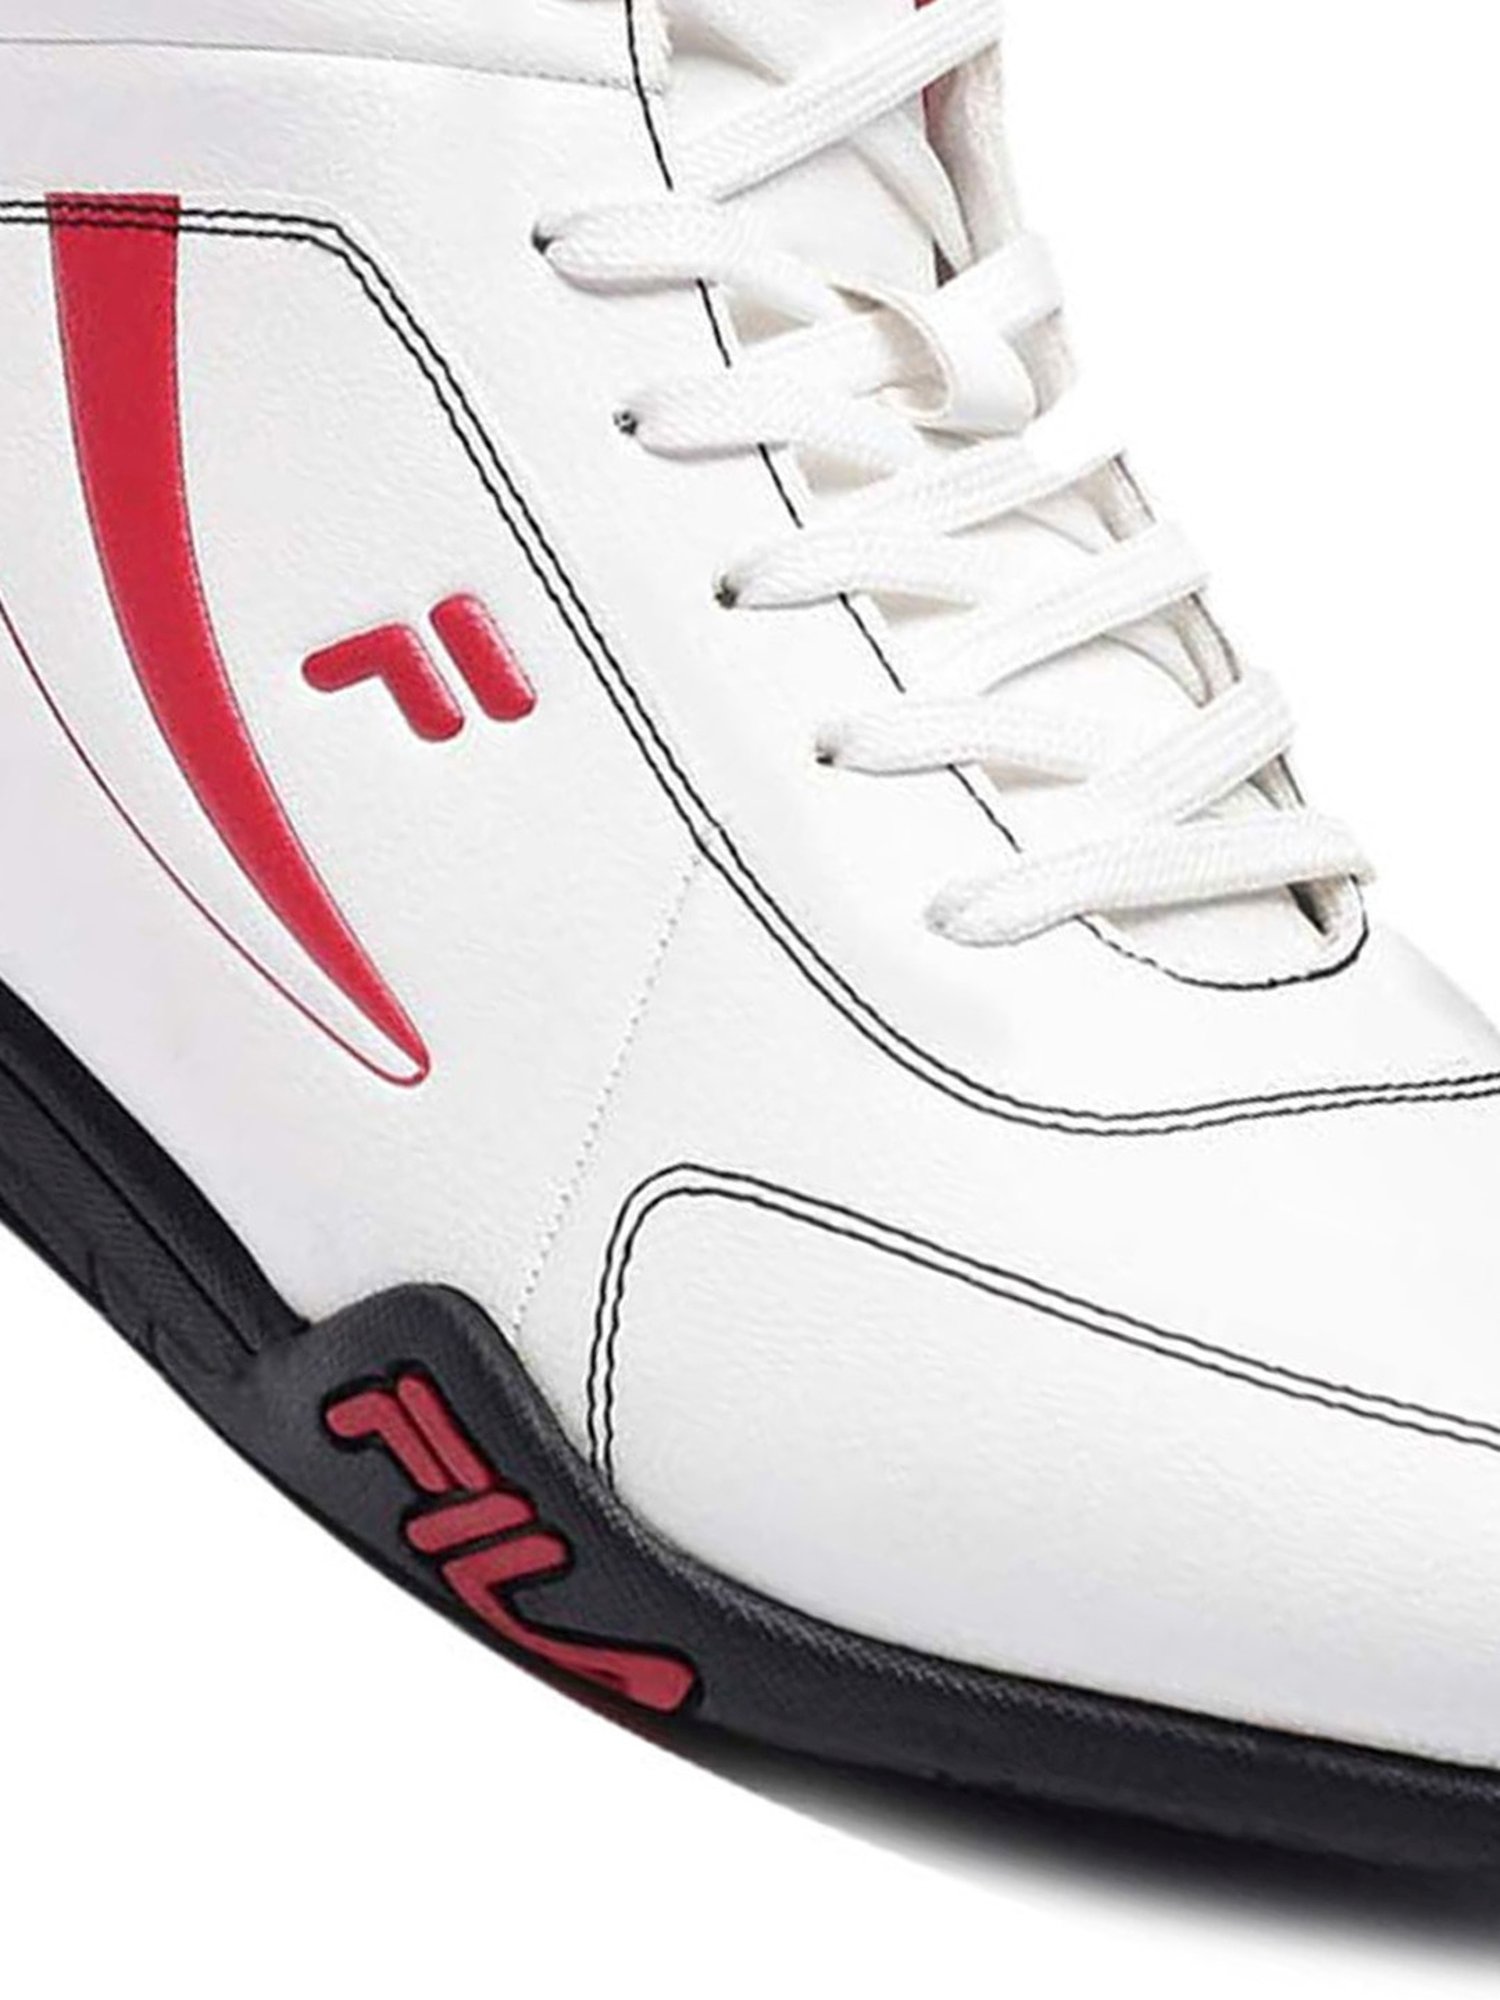 FILA REGENTOR III Sneakers For Men - Buy FILA REGENTOR III Sneakers For Men  Online at Best Price - Shop Online for Footwears in India | Flipkart.com